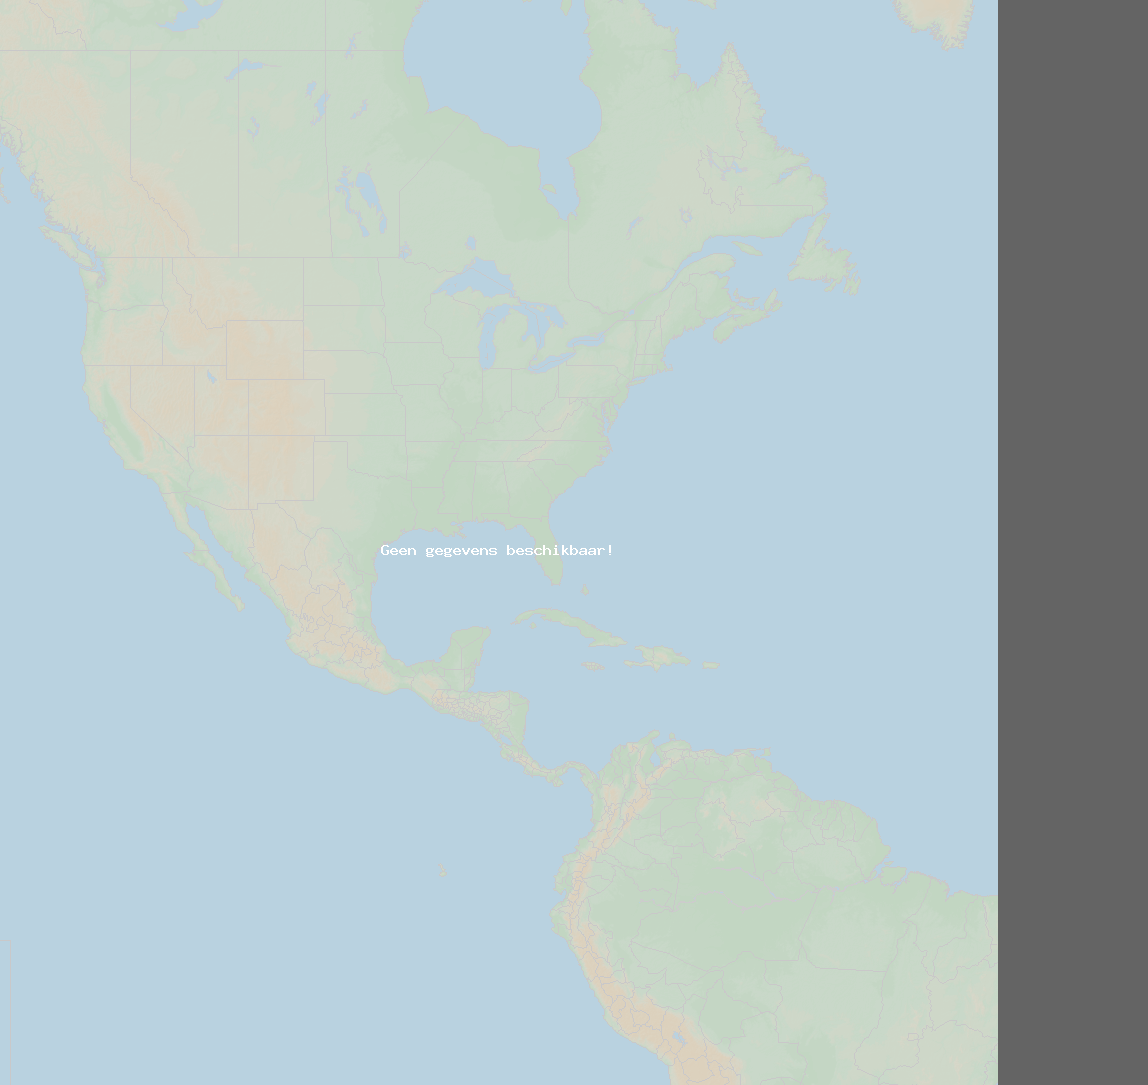 Inslagverhouding (Station Renaico, IX Region) North America 2022 